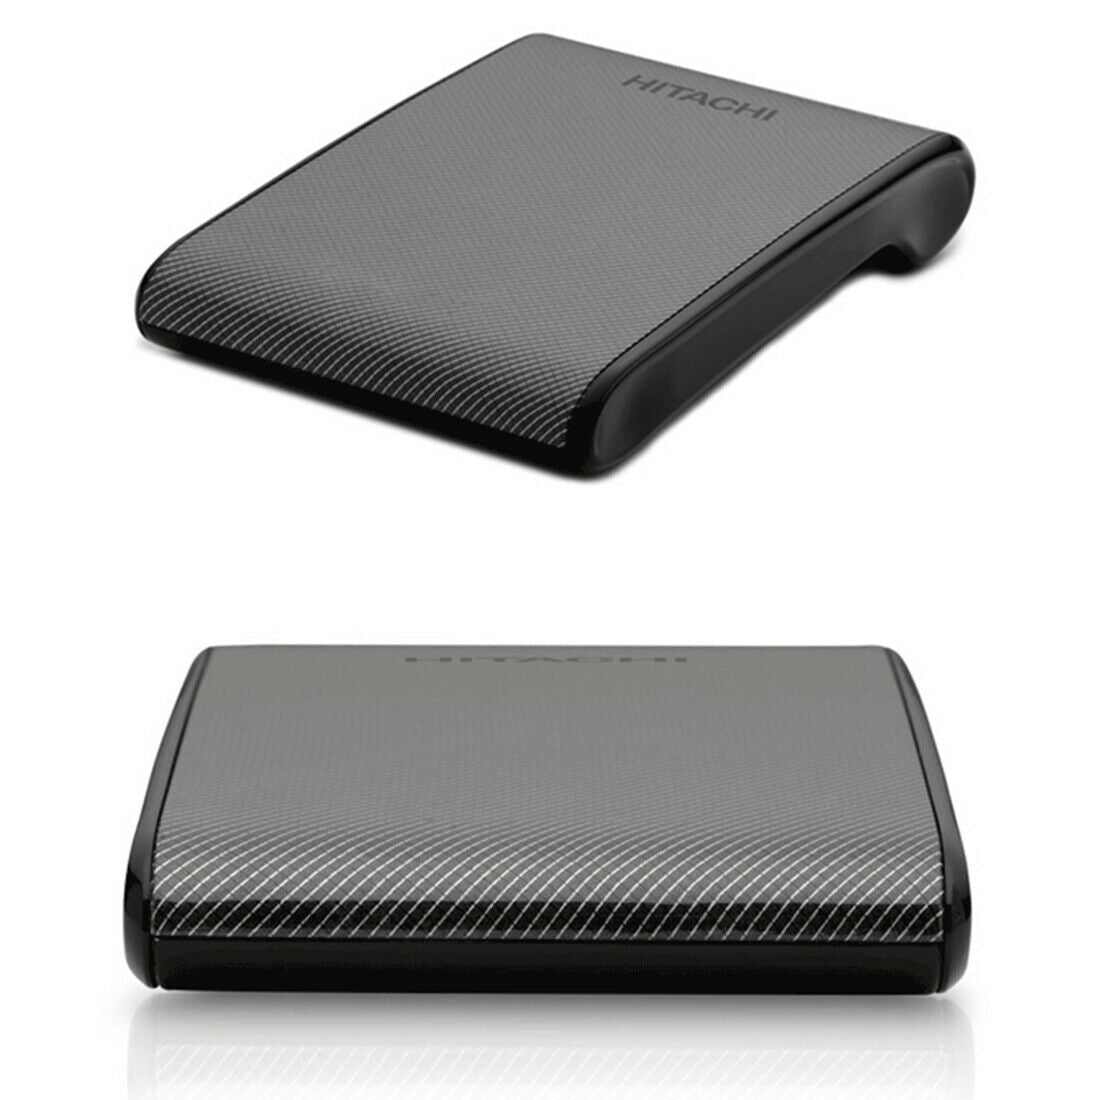 Hitachi SimpleDrive Mini Portable External Hard Drive 500GB USB 2.0 HDD for PC